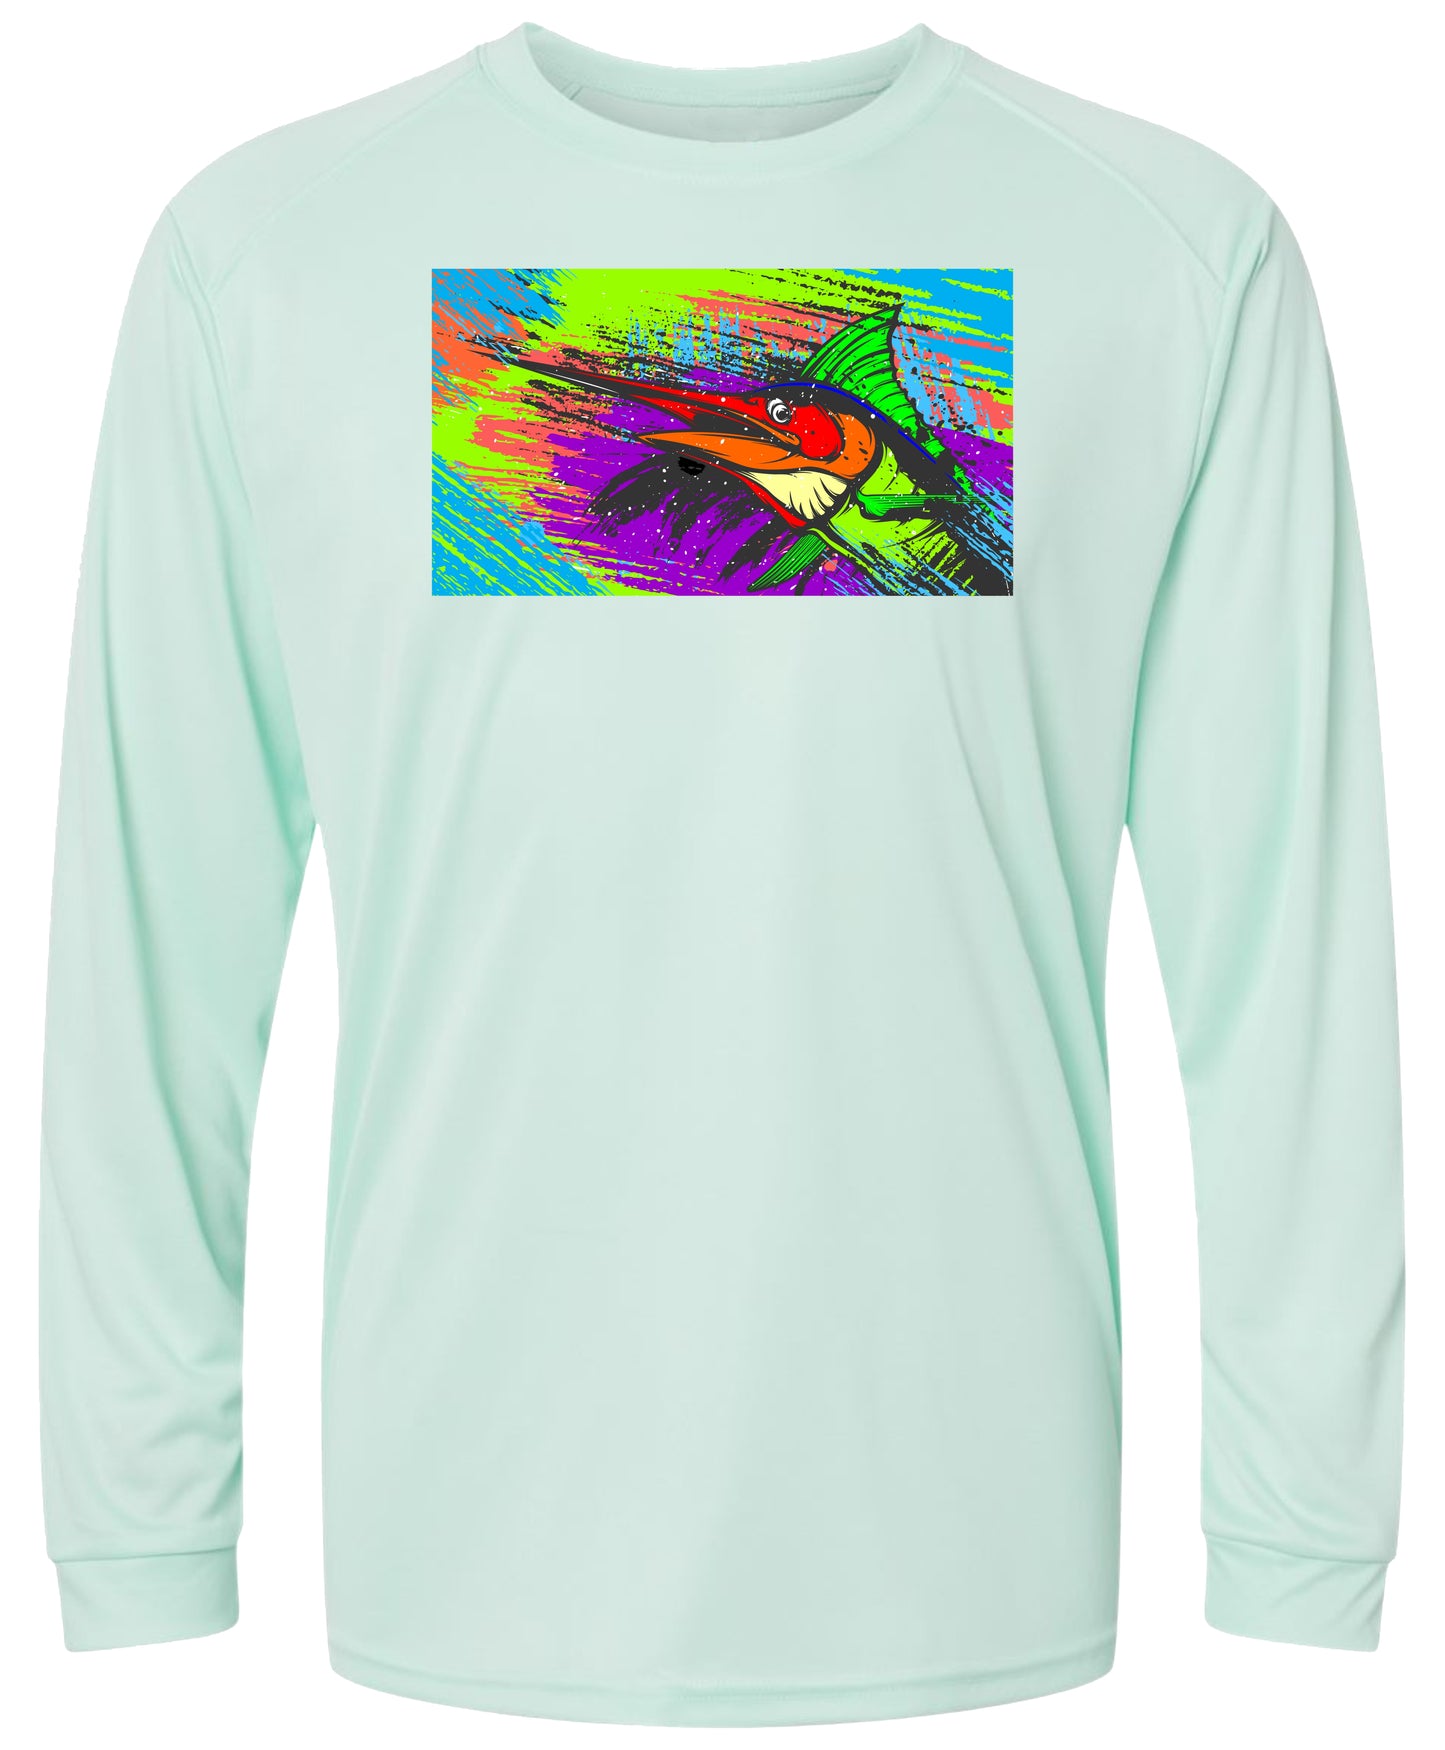 27 LM Painted Swordfish Long Sleeve UPF 50+ Shirt Fishing Shirt Lake Shirt Beach Shirt Marlin Fishing Shirt